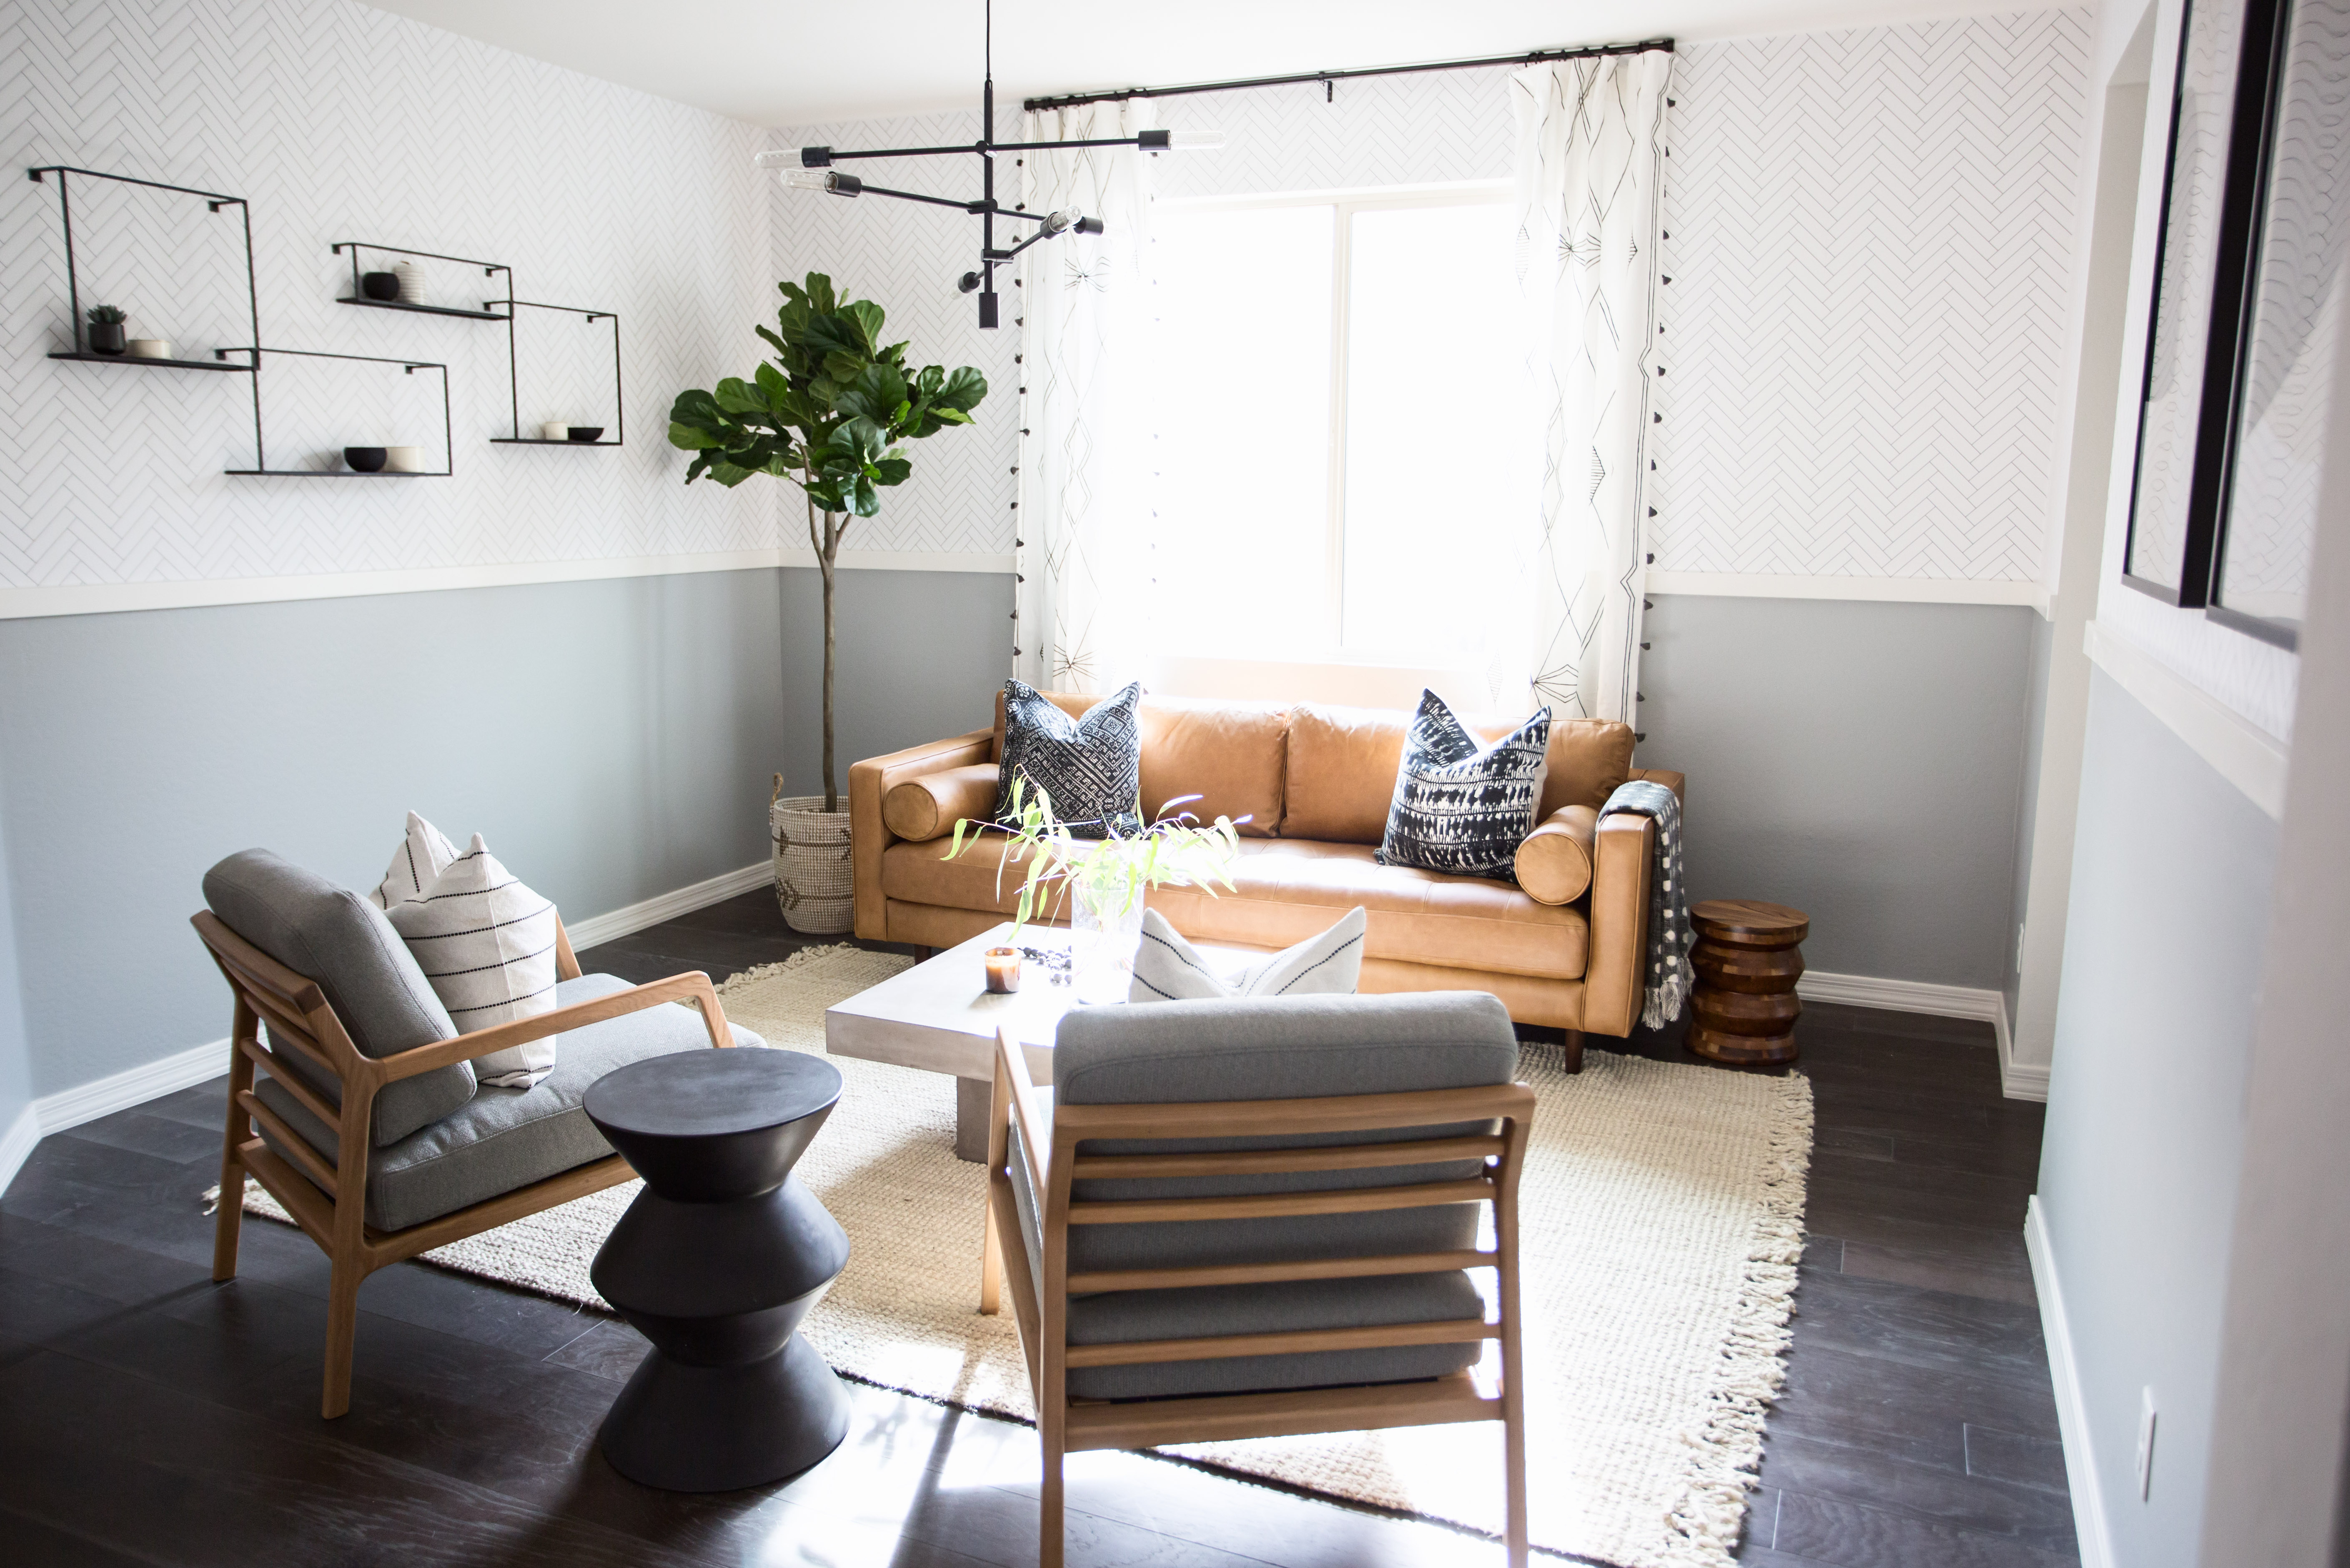 Nordic Style Decoration Geometric Animal Home Living Room TV Cabinet Decoration-Large